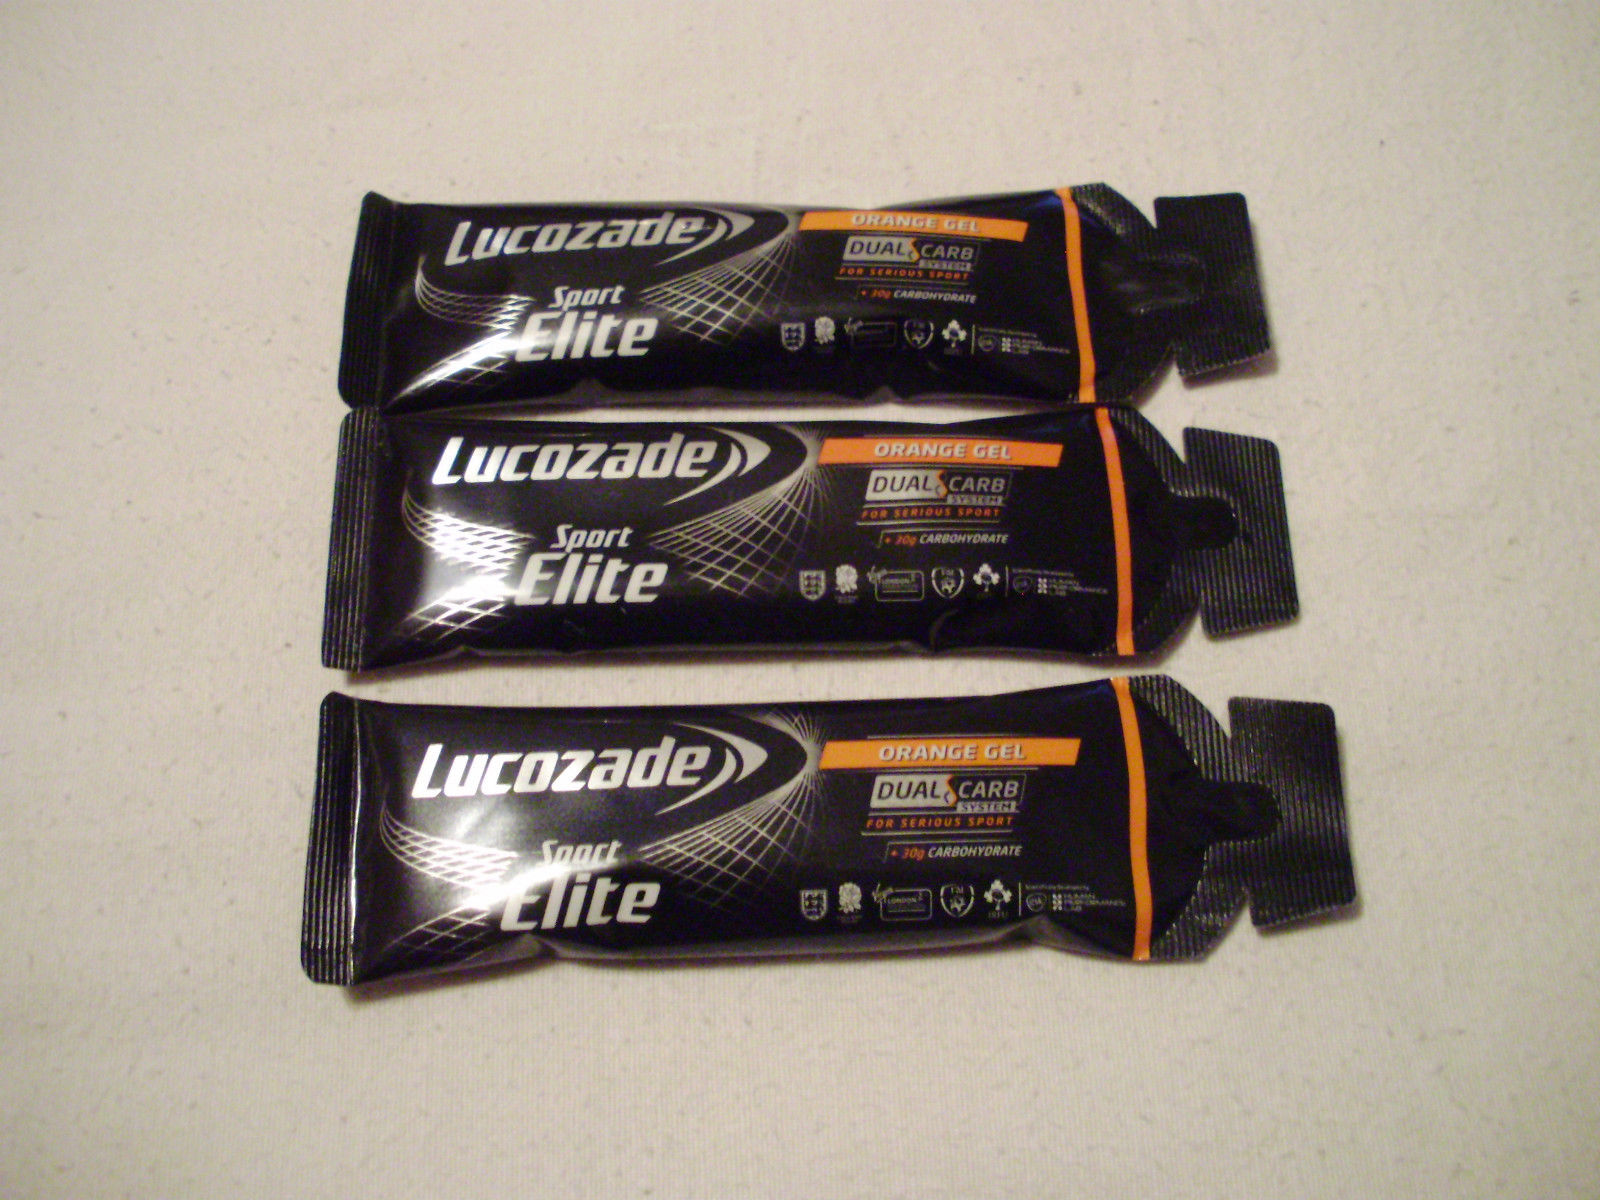 Lucozade-sport-elite-orange-flavoured-supplement-gels